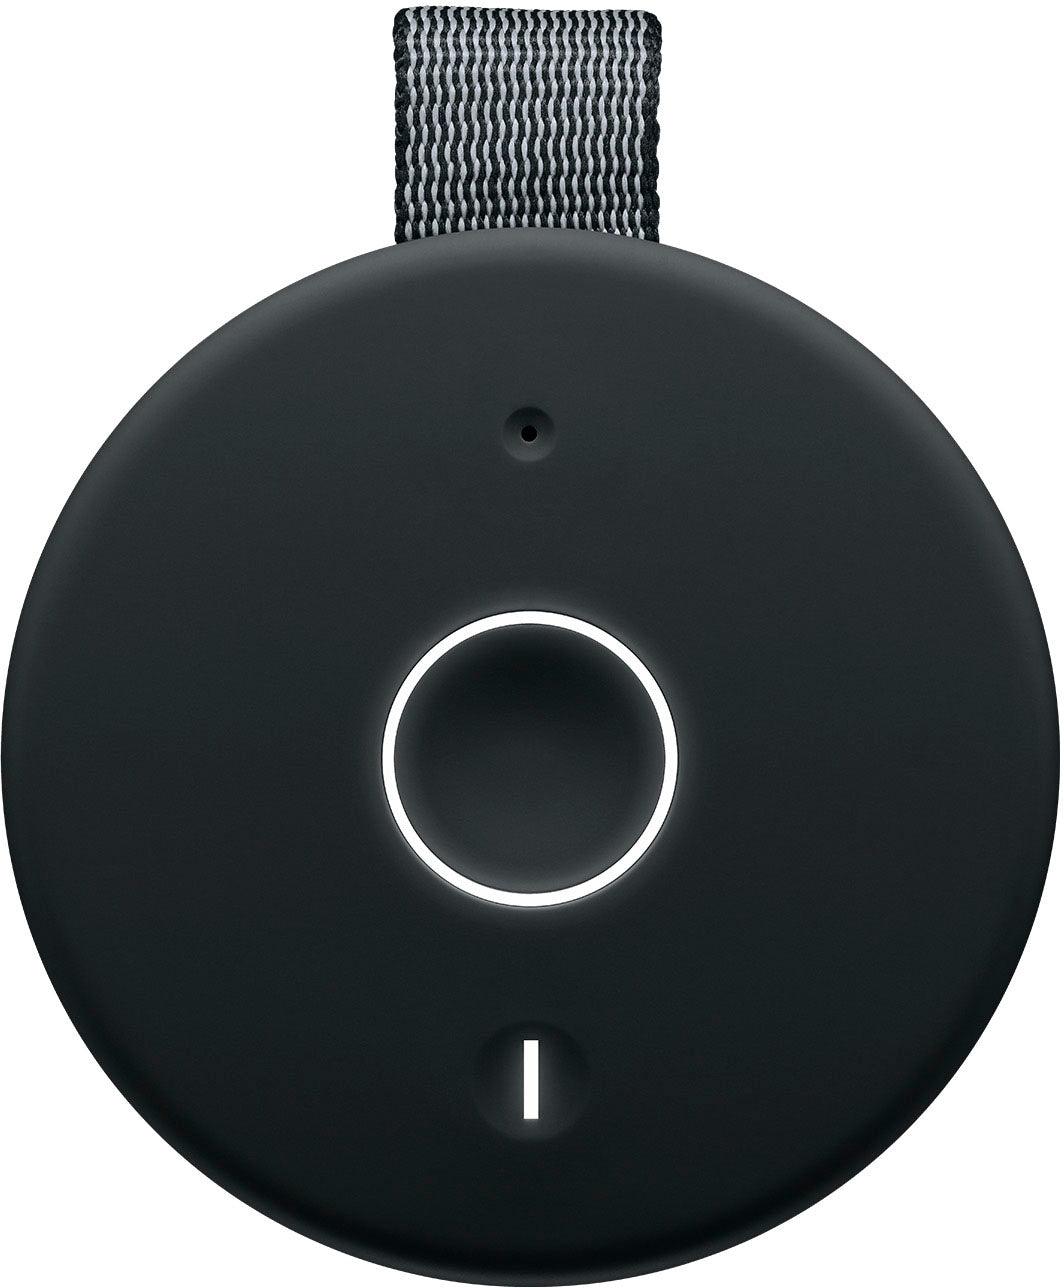 Ultimate Ears - MEGABOOM 3 Portable Wireless Bluetooth Speaker with Waterproof/Dustproof Design - Night Black_2